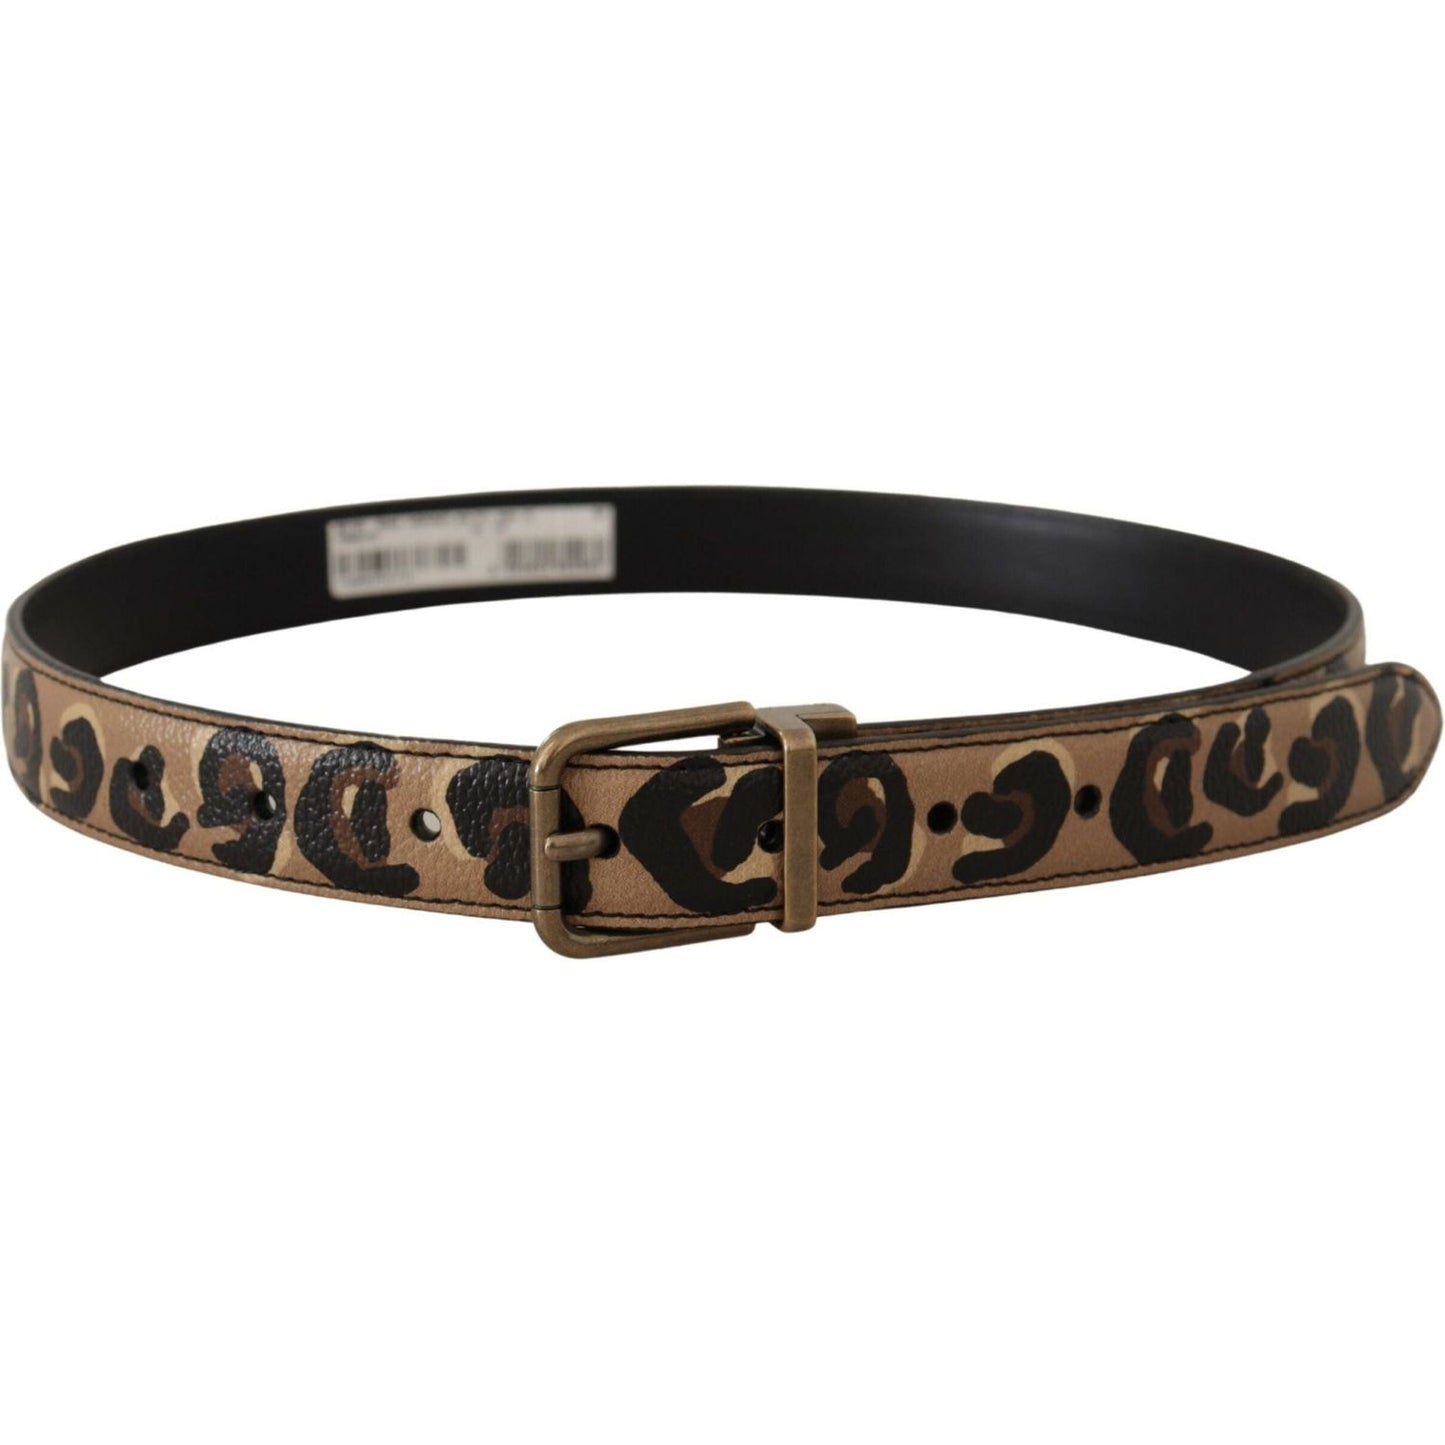 Dolce & Gabbana Chic Engraved Logo Leather Belt brown-leather-leopard-print-bronze-metal-buckle-belt IMG_8969-scaled-6b85c473-f9a.jpg